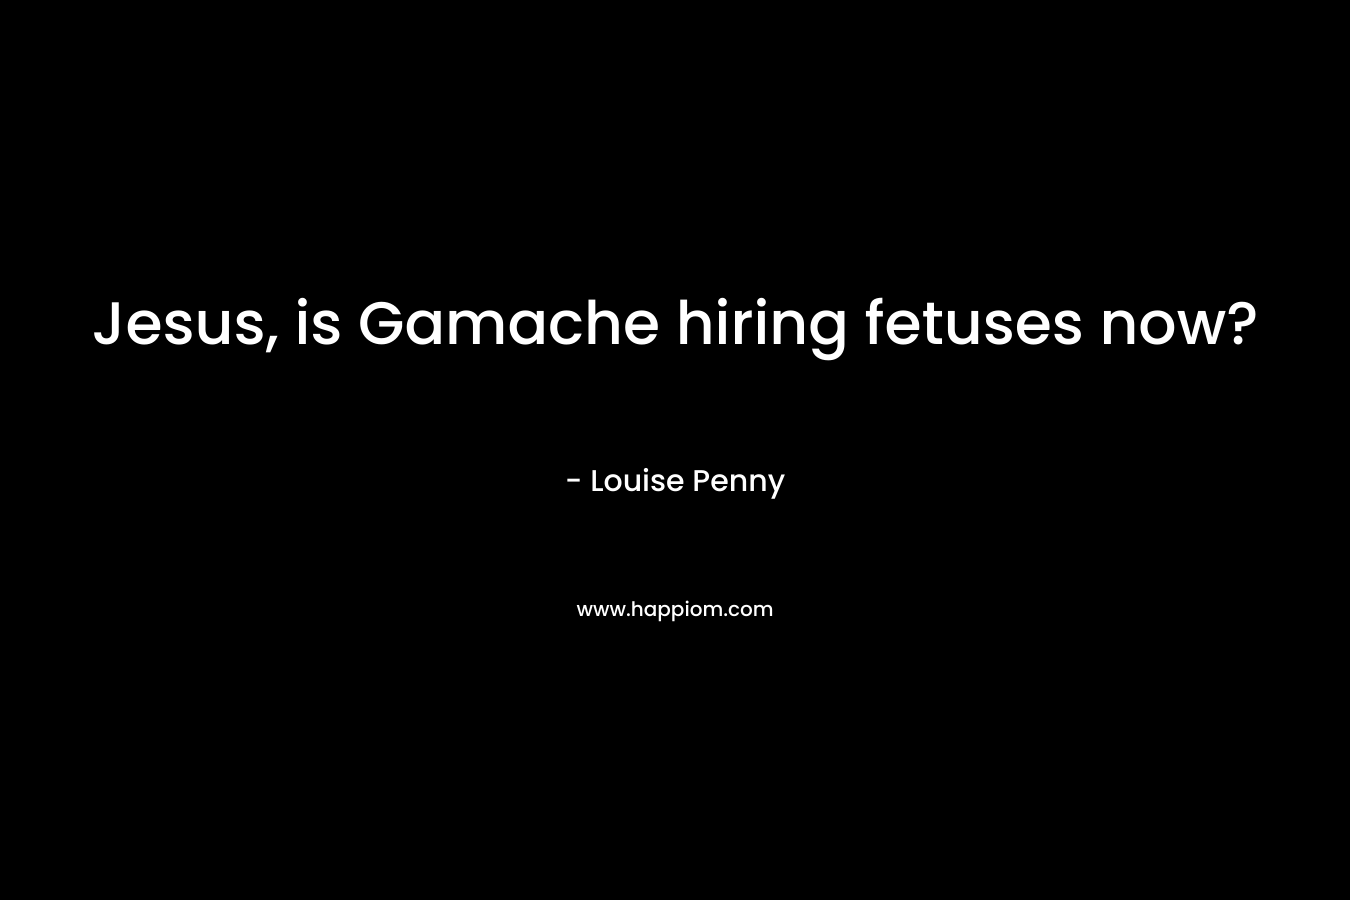 Jesus, is Gamache hiring fetuses now? – Louise Penny